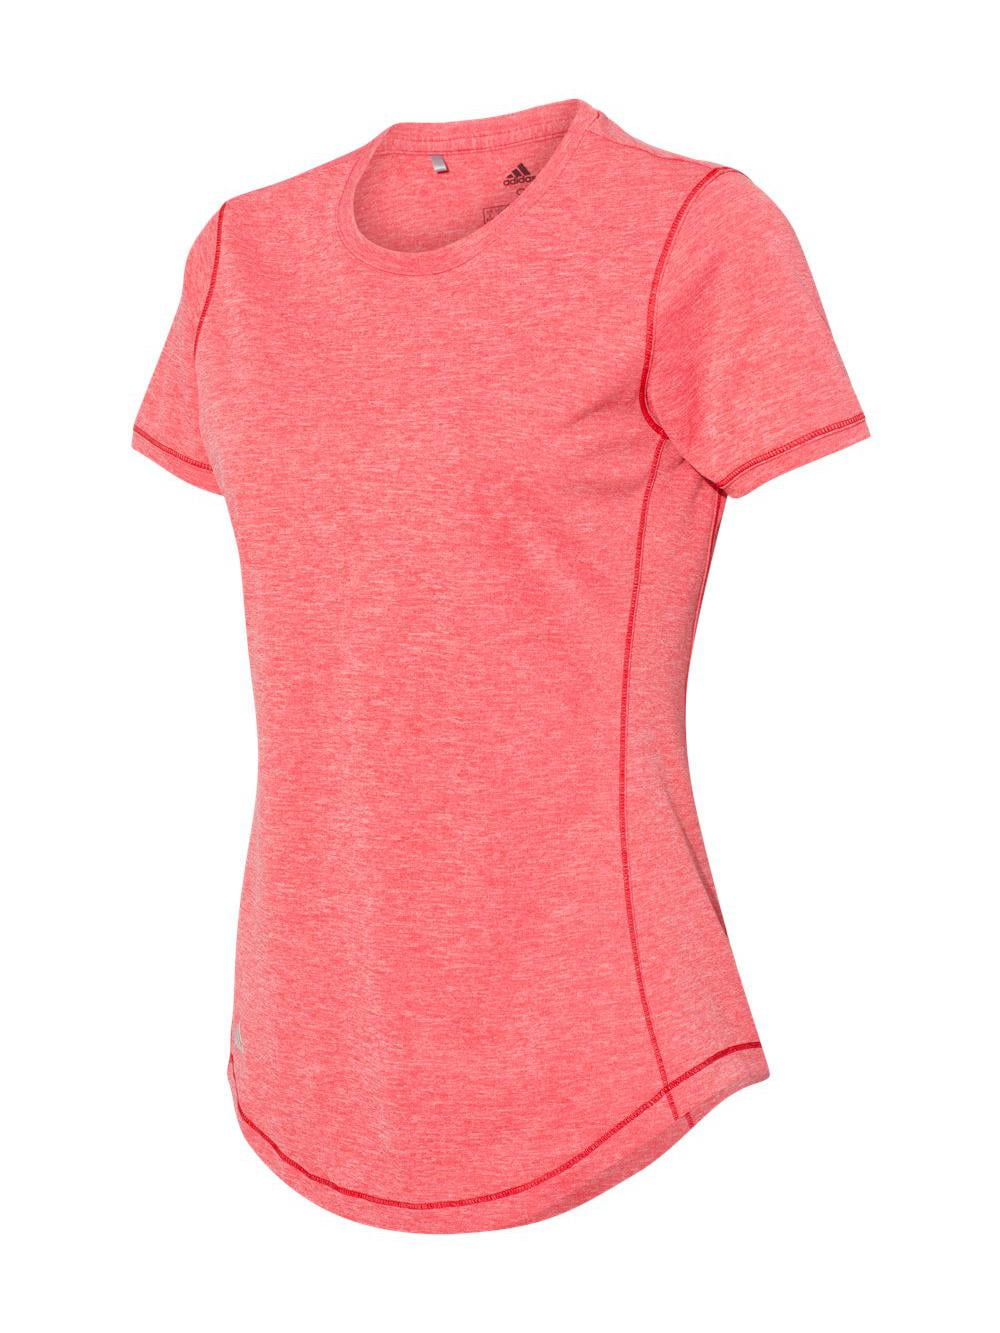 Adidas - Women's Sport T-Shirt - A377 - Power Red Heather - Size: S 